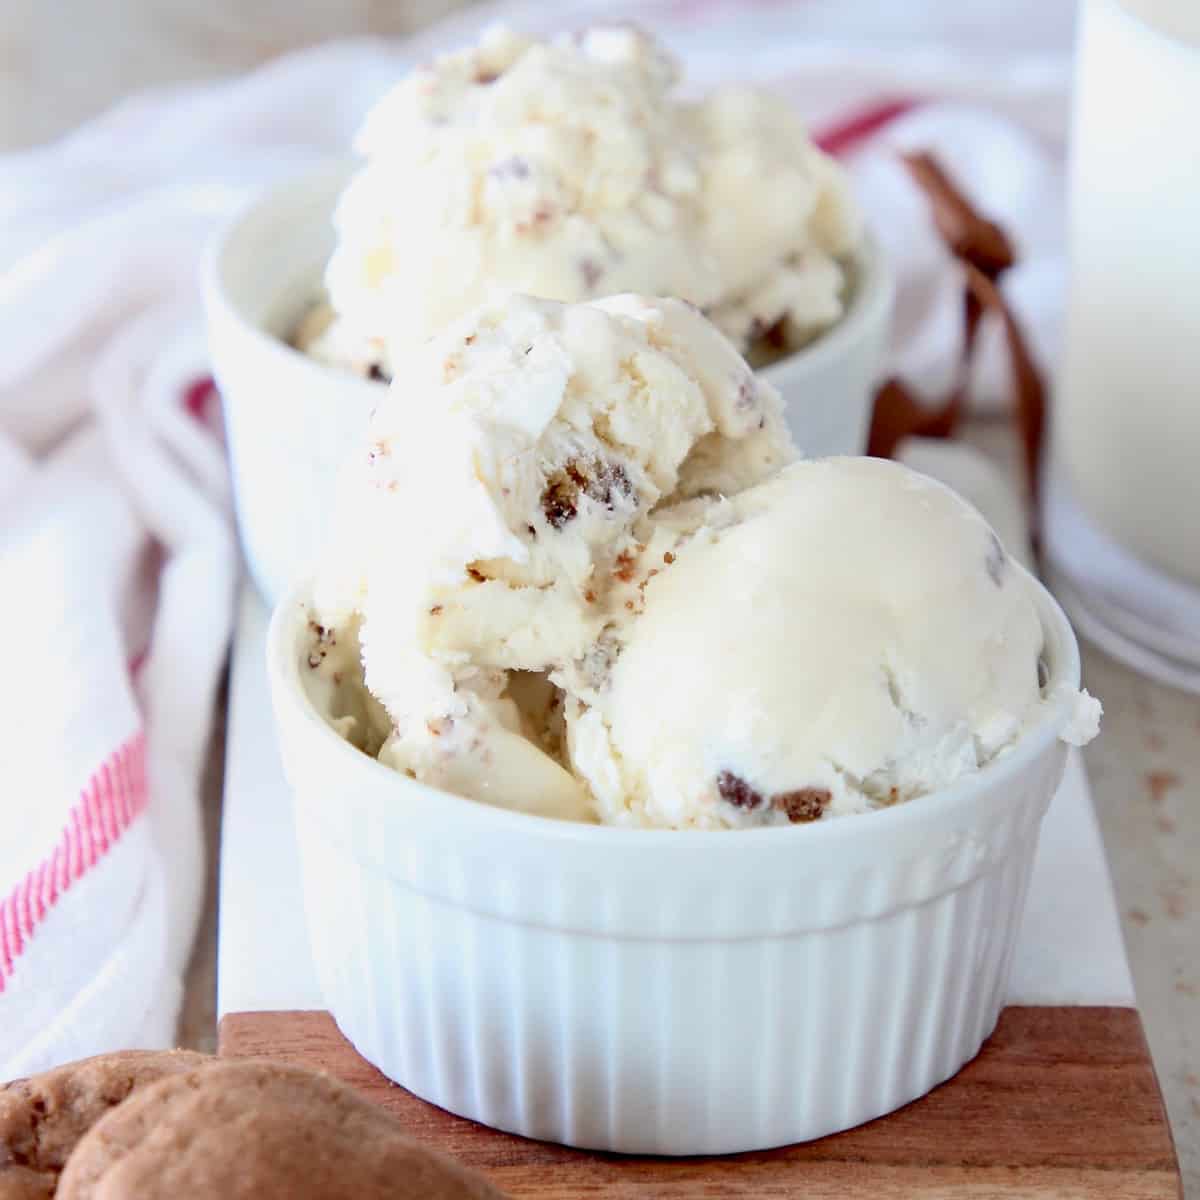 https://whitneybond.com/wp-content/uploads/2020/12/milk-and-cookies-ice-cream-3.jpg